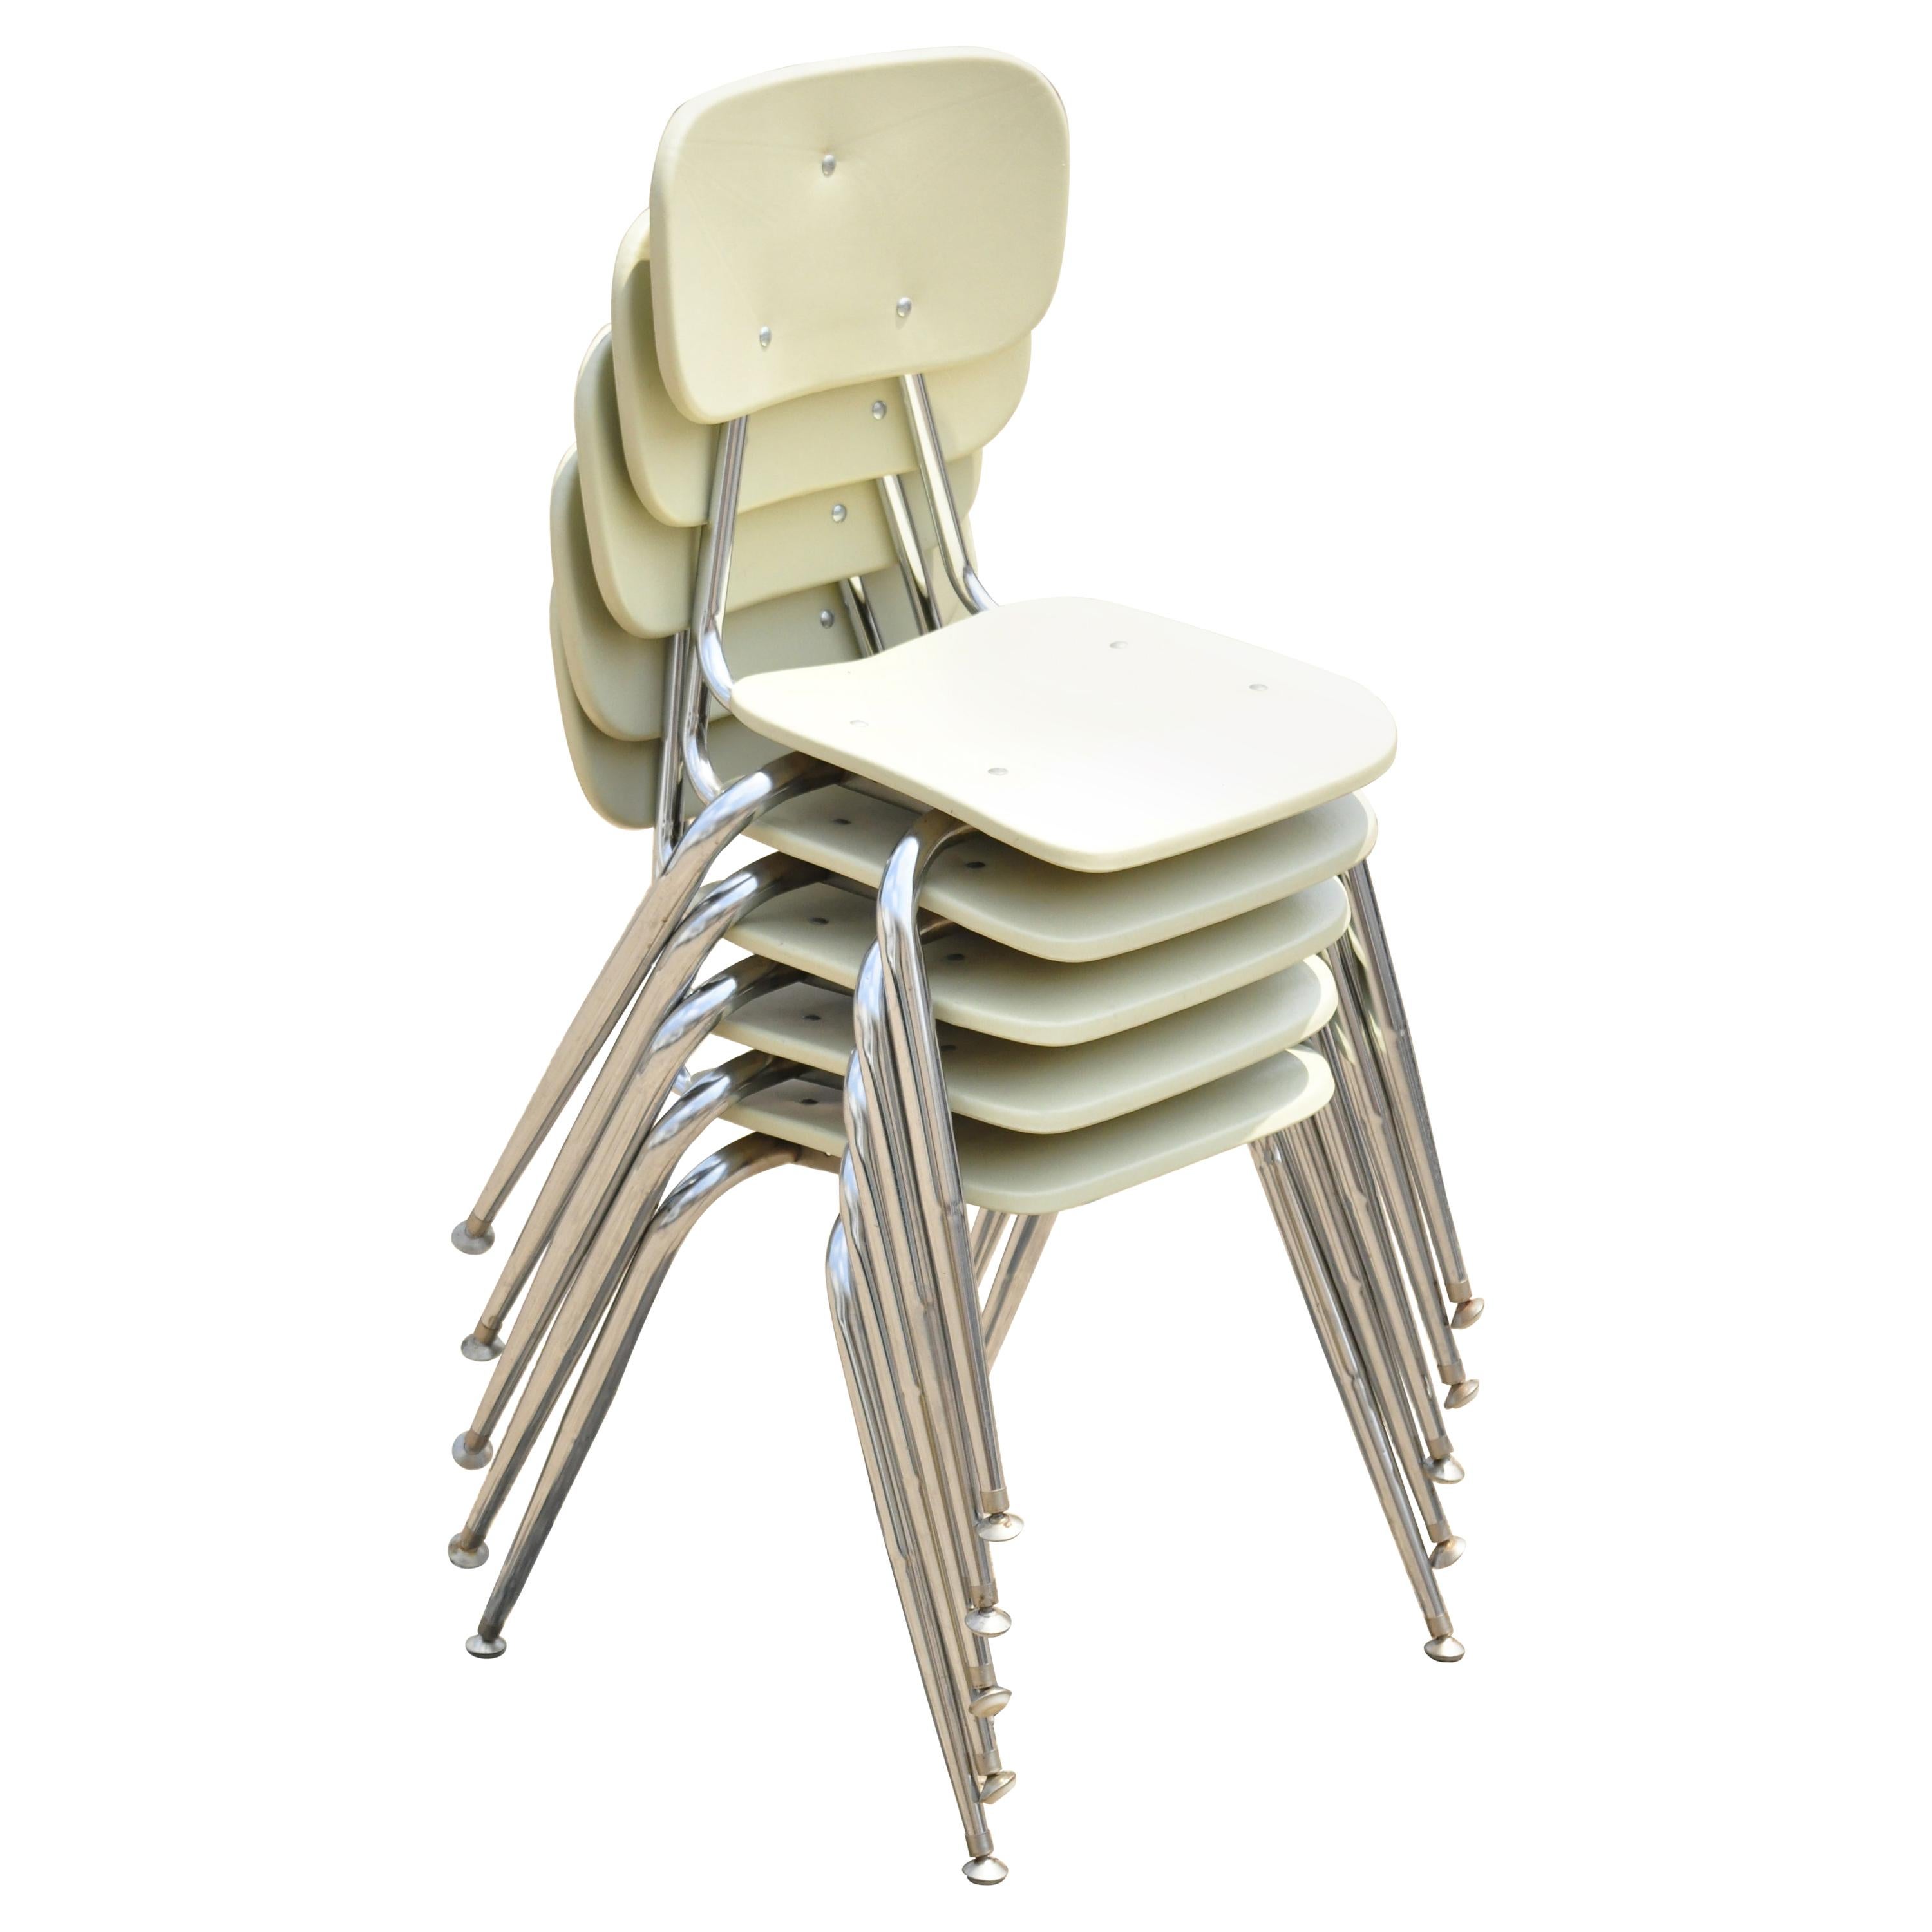 Vtg Beige Molded Plastic Chrome Metal Base Stacking School Side Chair, Single